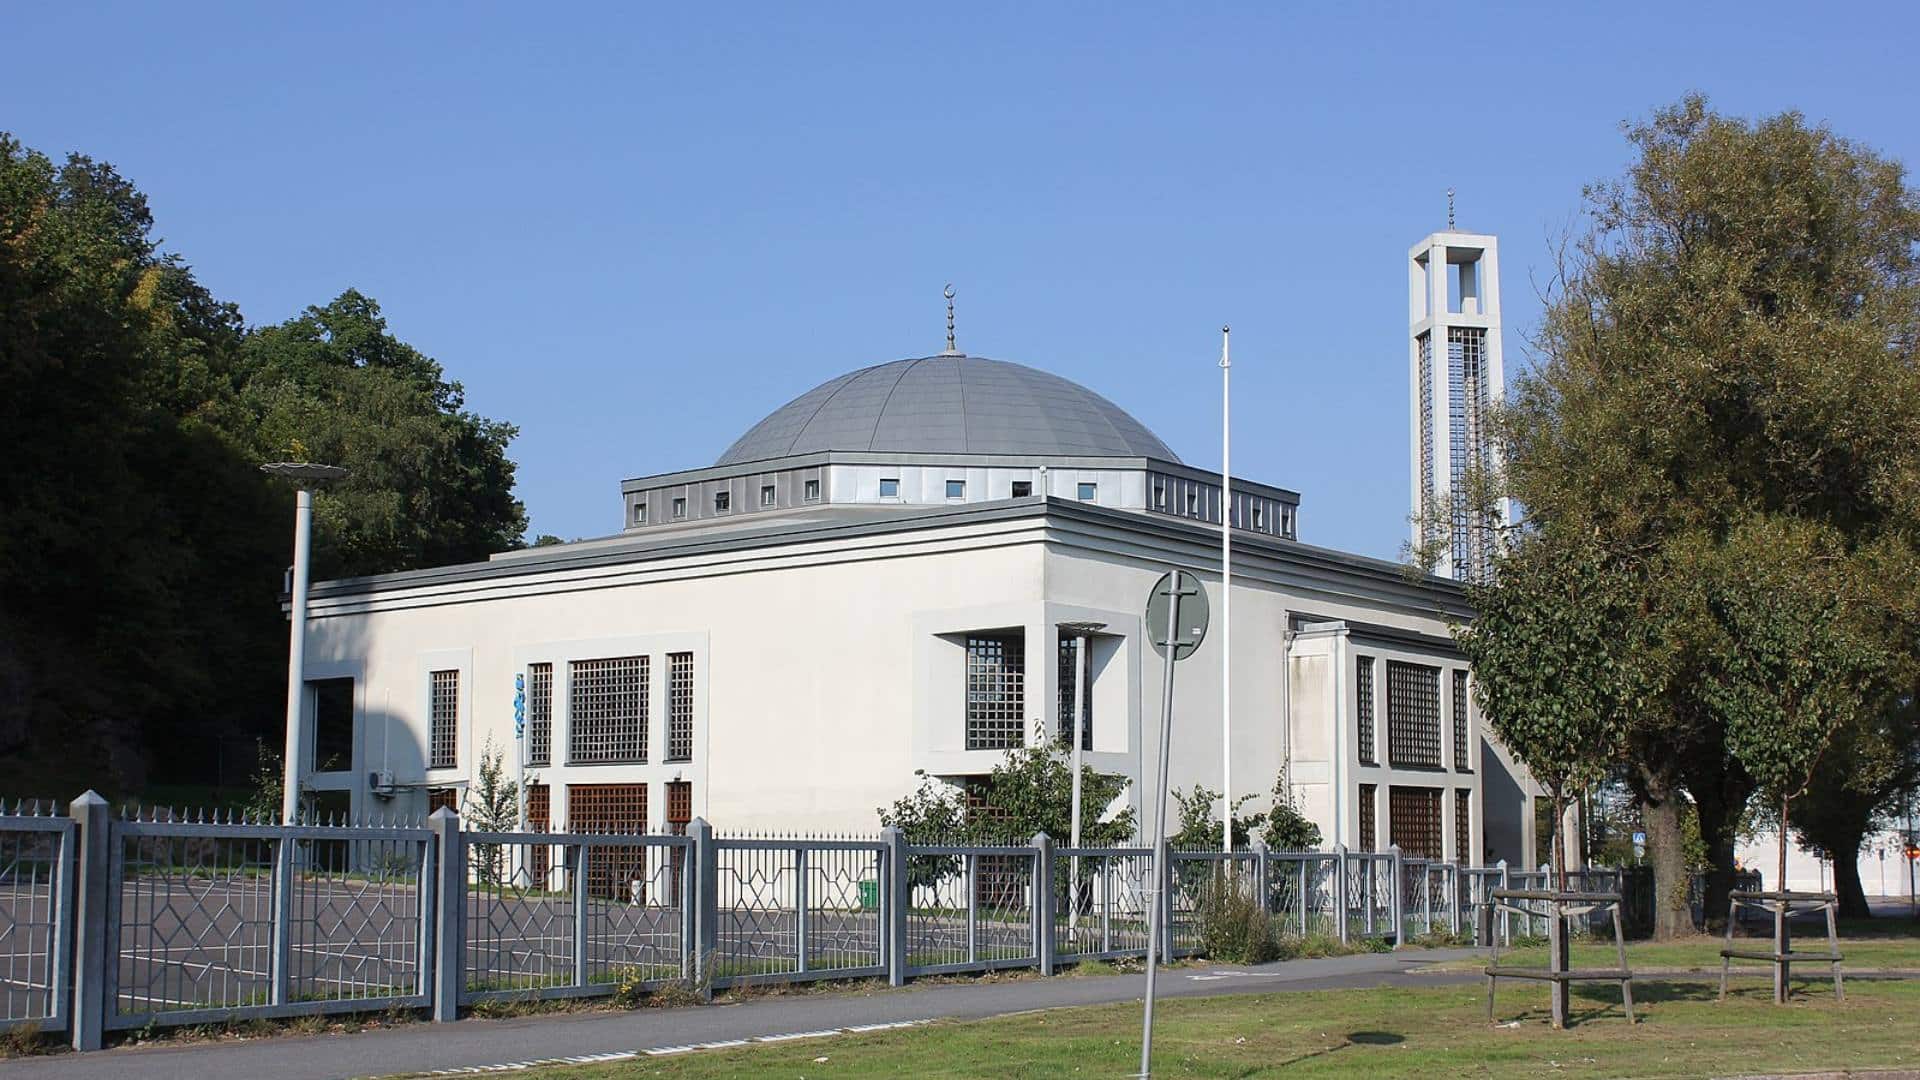 The Gothenburg Mosque